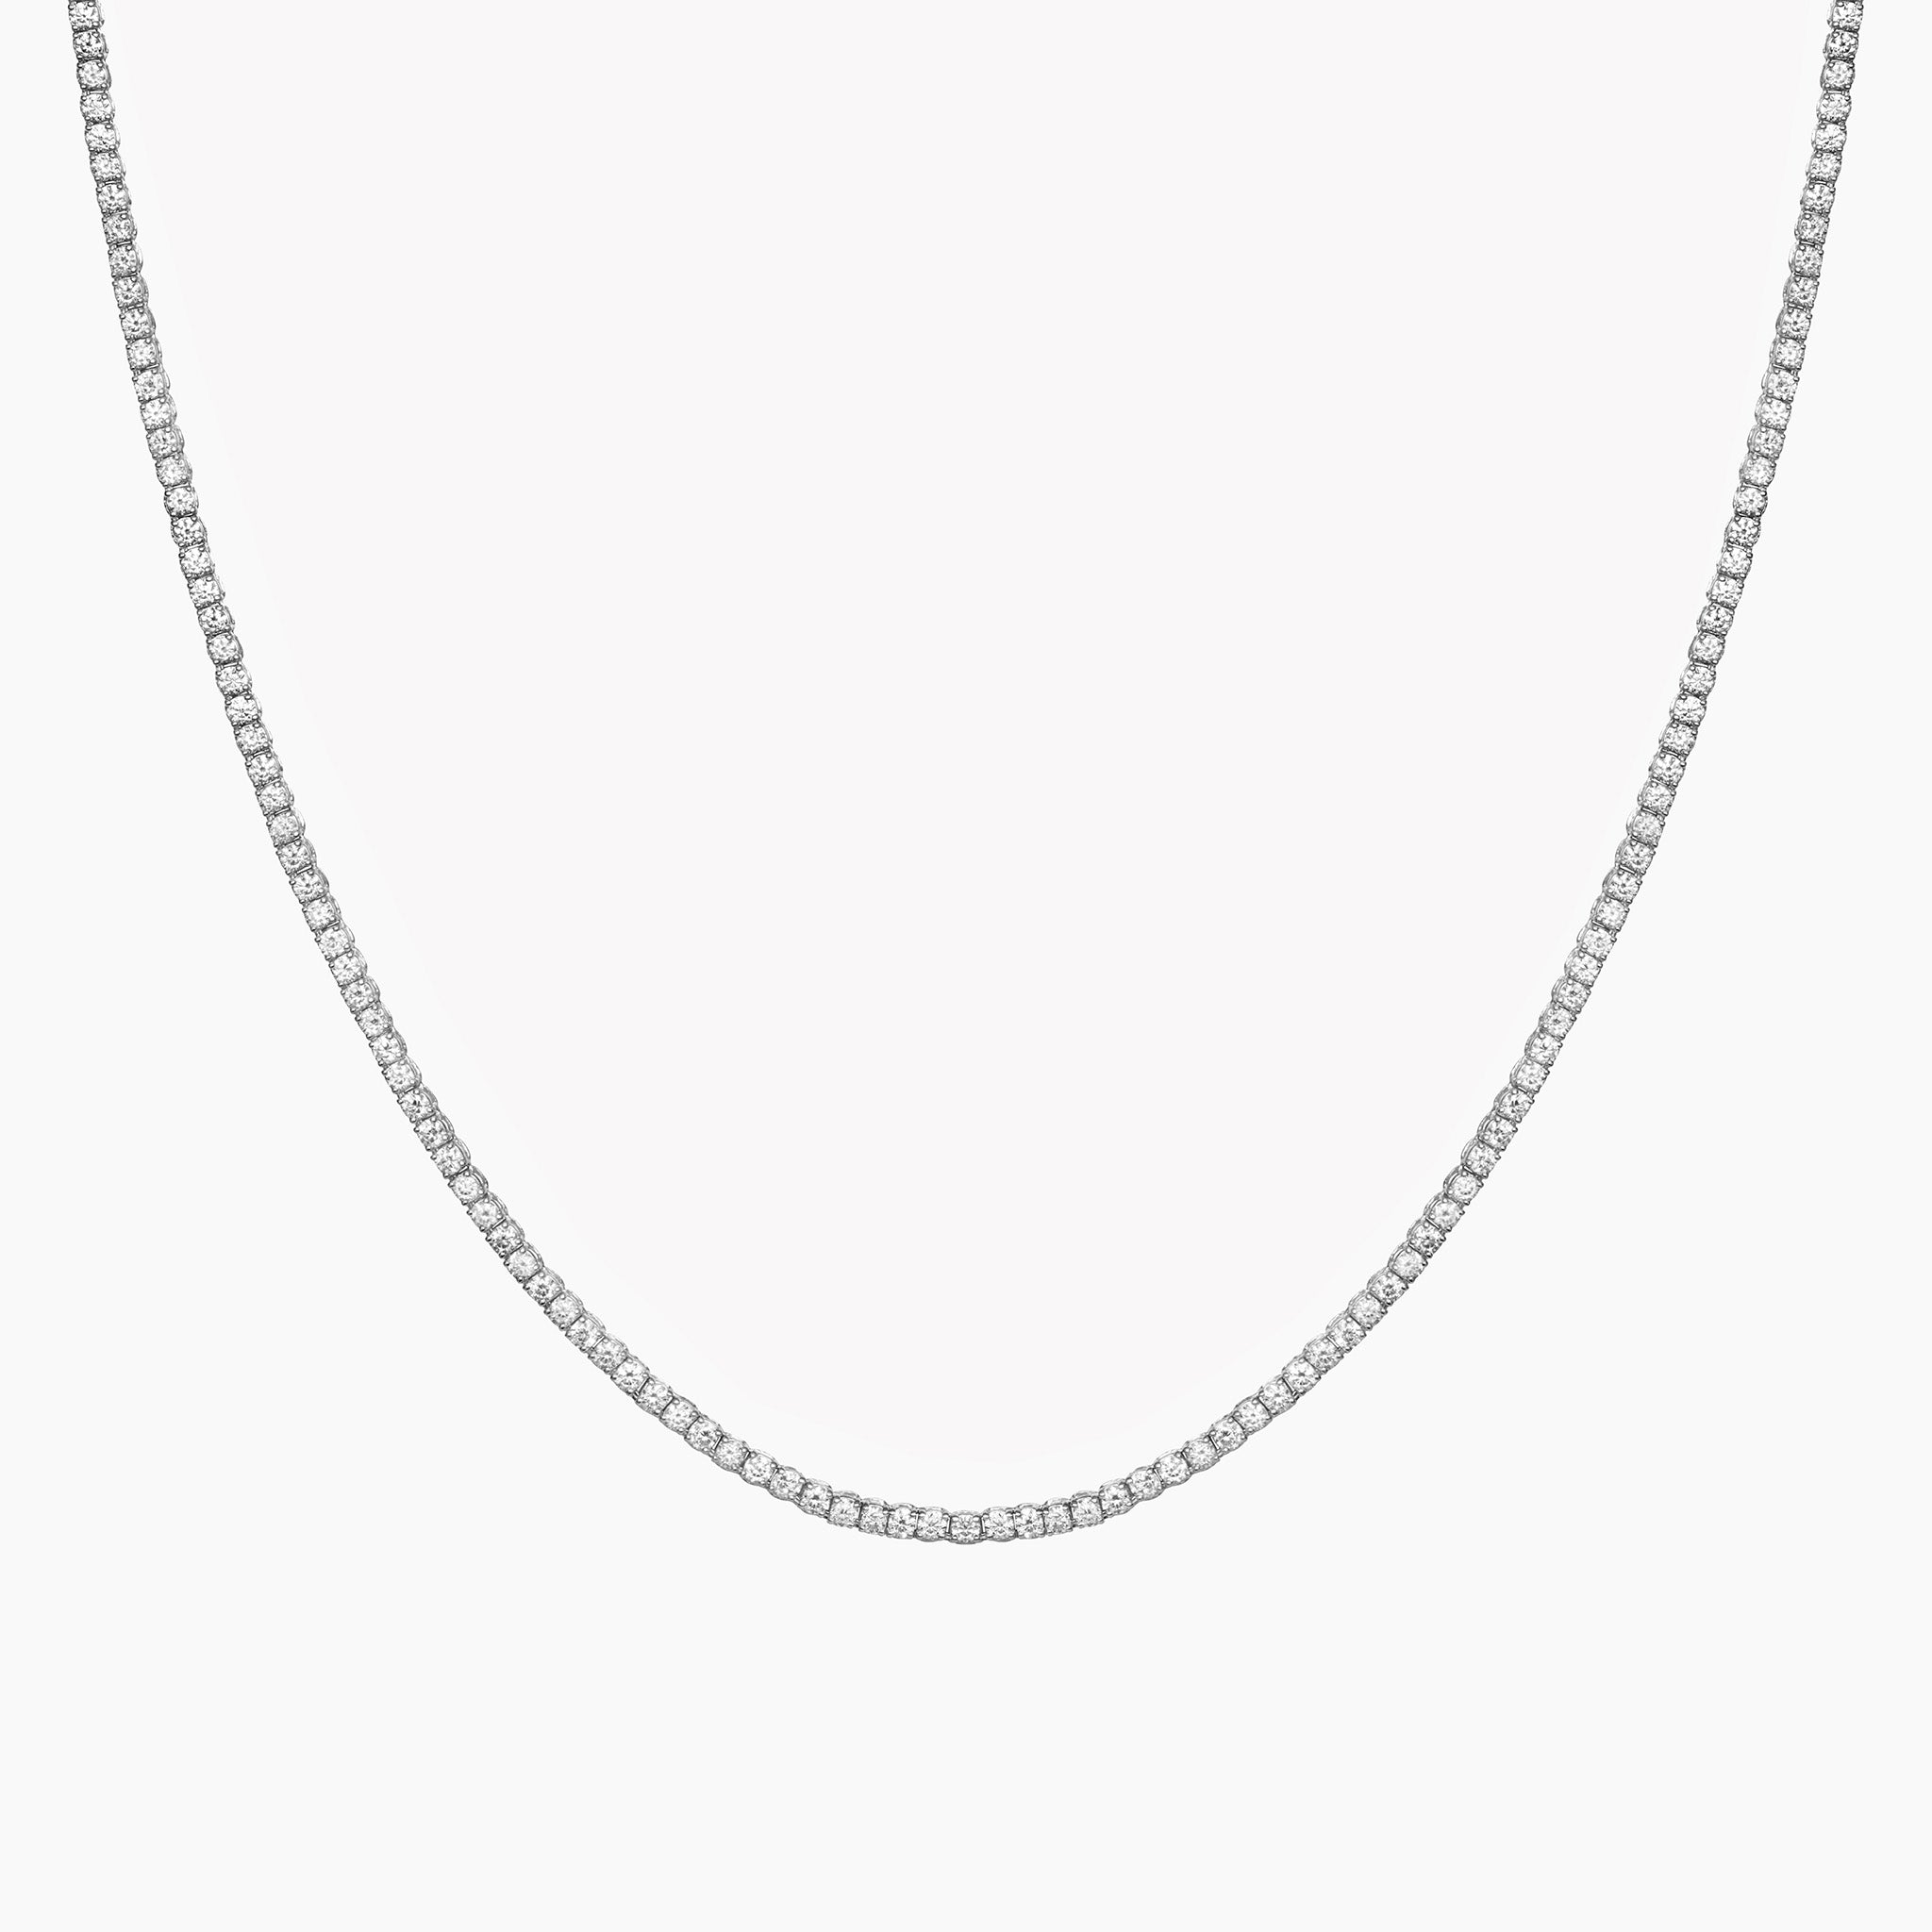 Pin by Manoj kadel on Diamond necklaces colour stone & perls jewellery |  Bridal diamond necklace, Necklace, Choker necklace designs